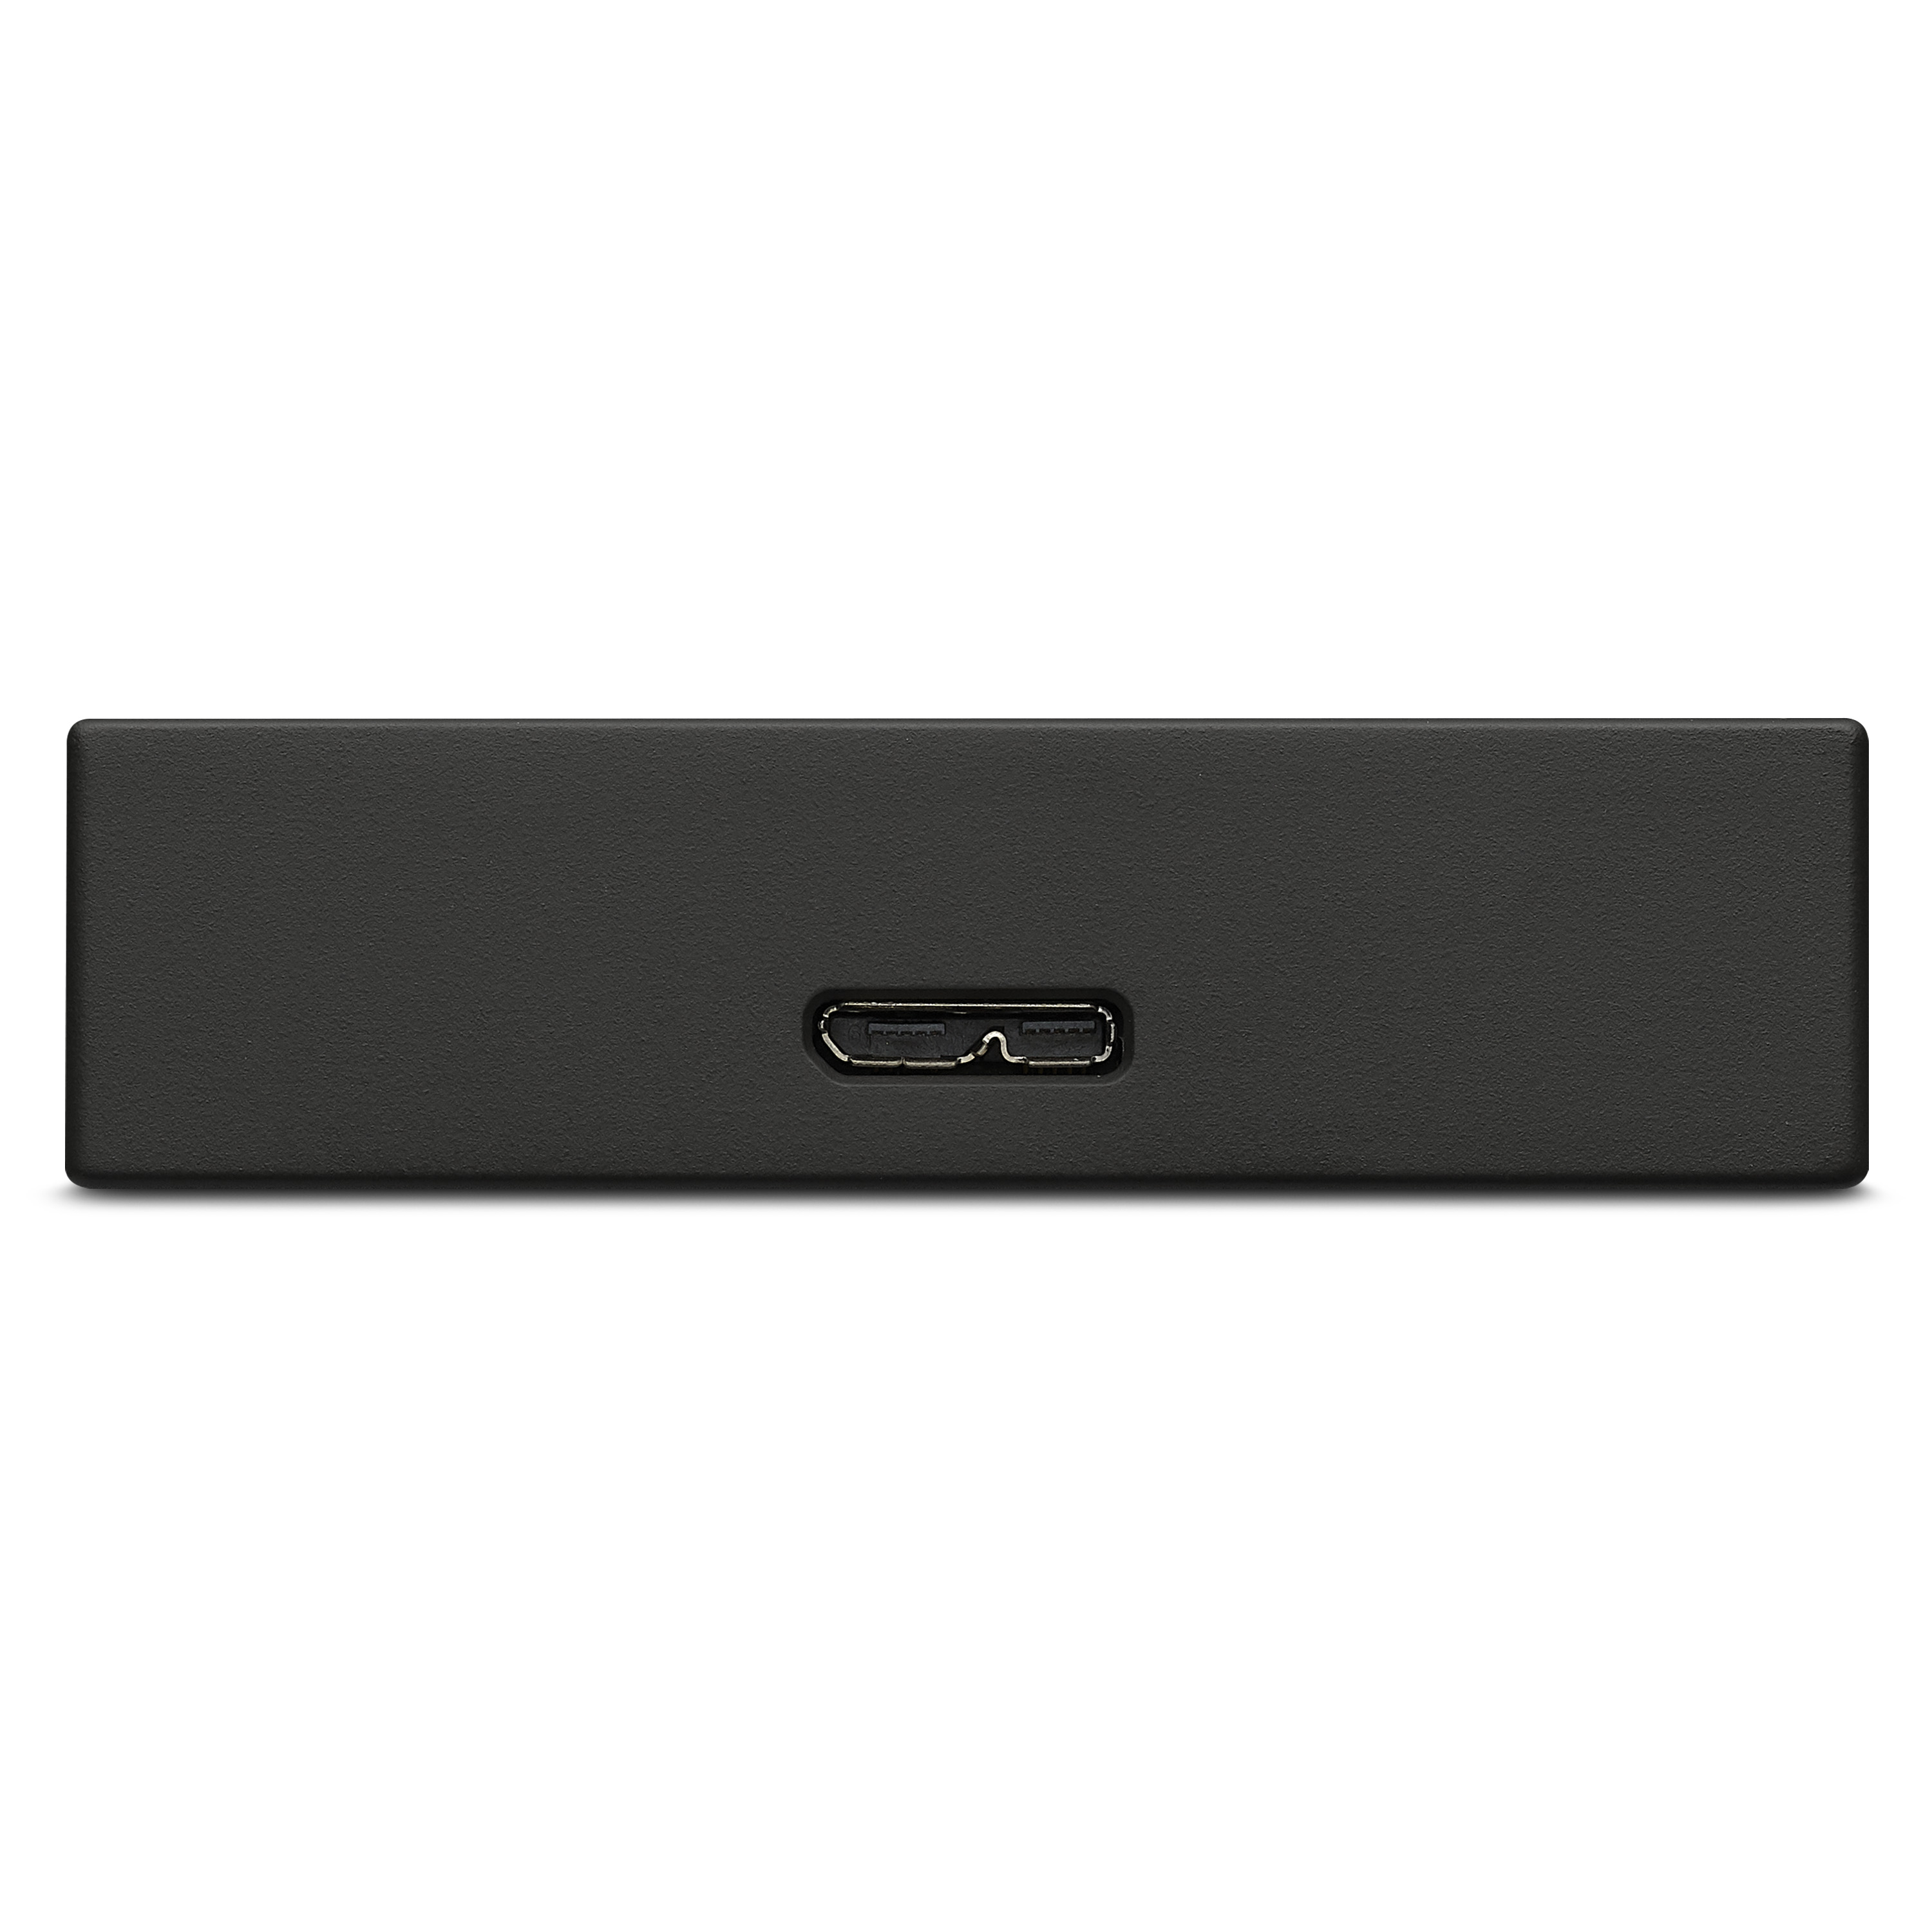 Seagate Backup Plus Portable 4TB External USB 3.0 Hard Drive - Black - image 5 of 8